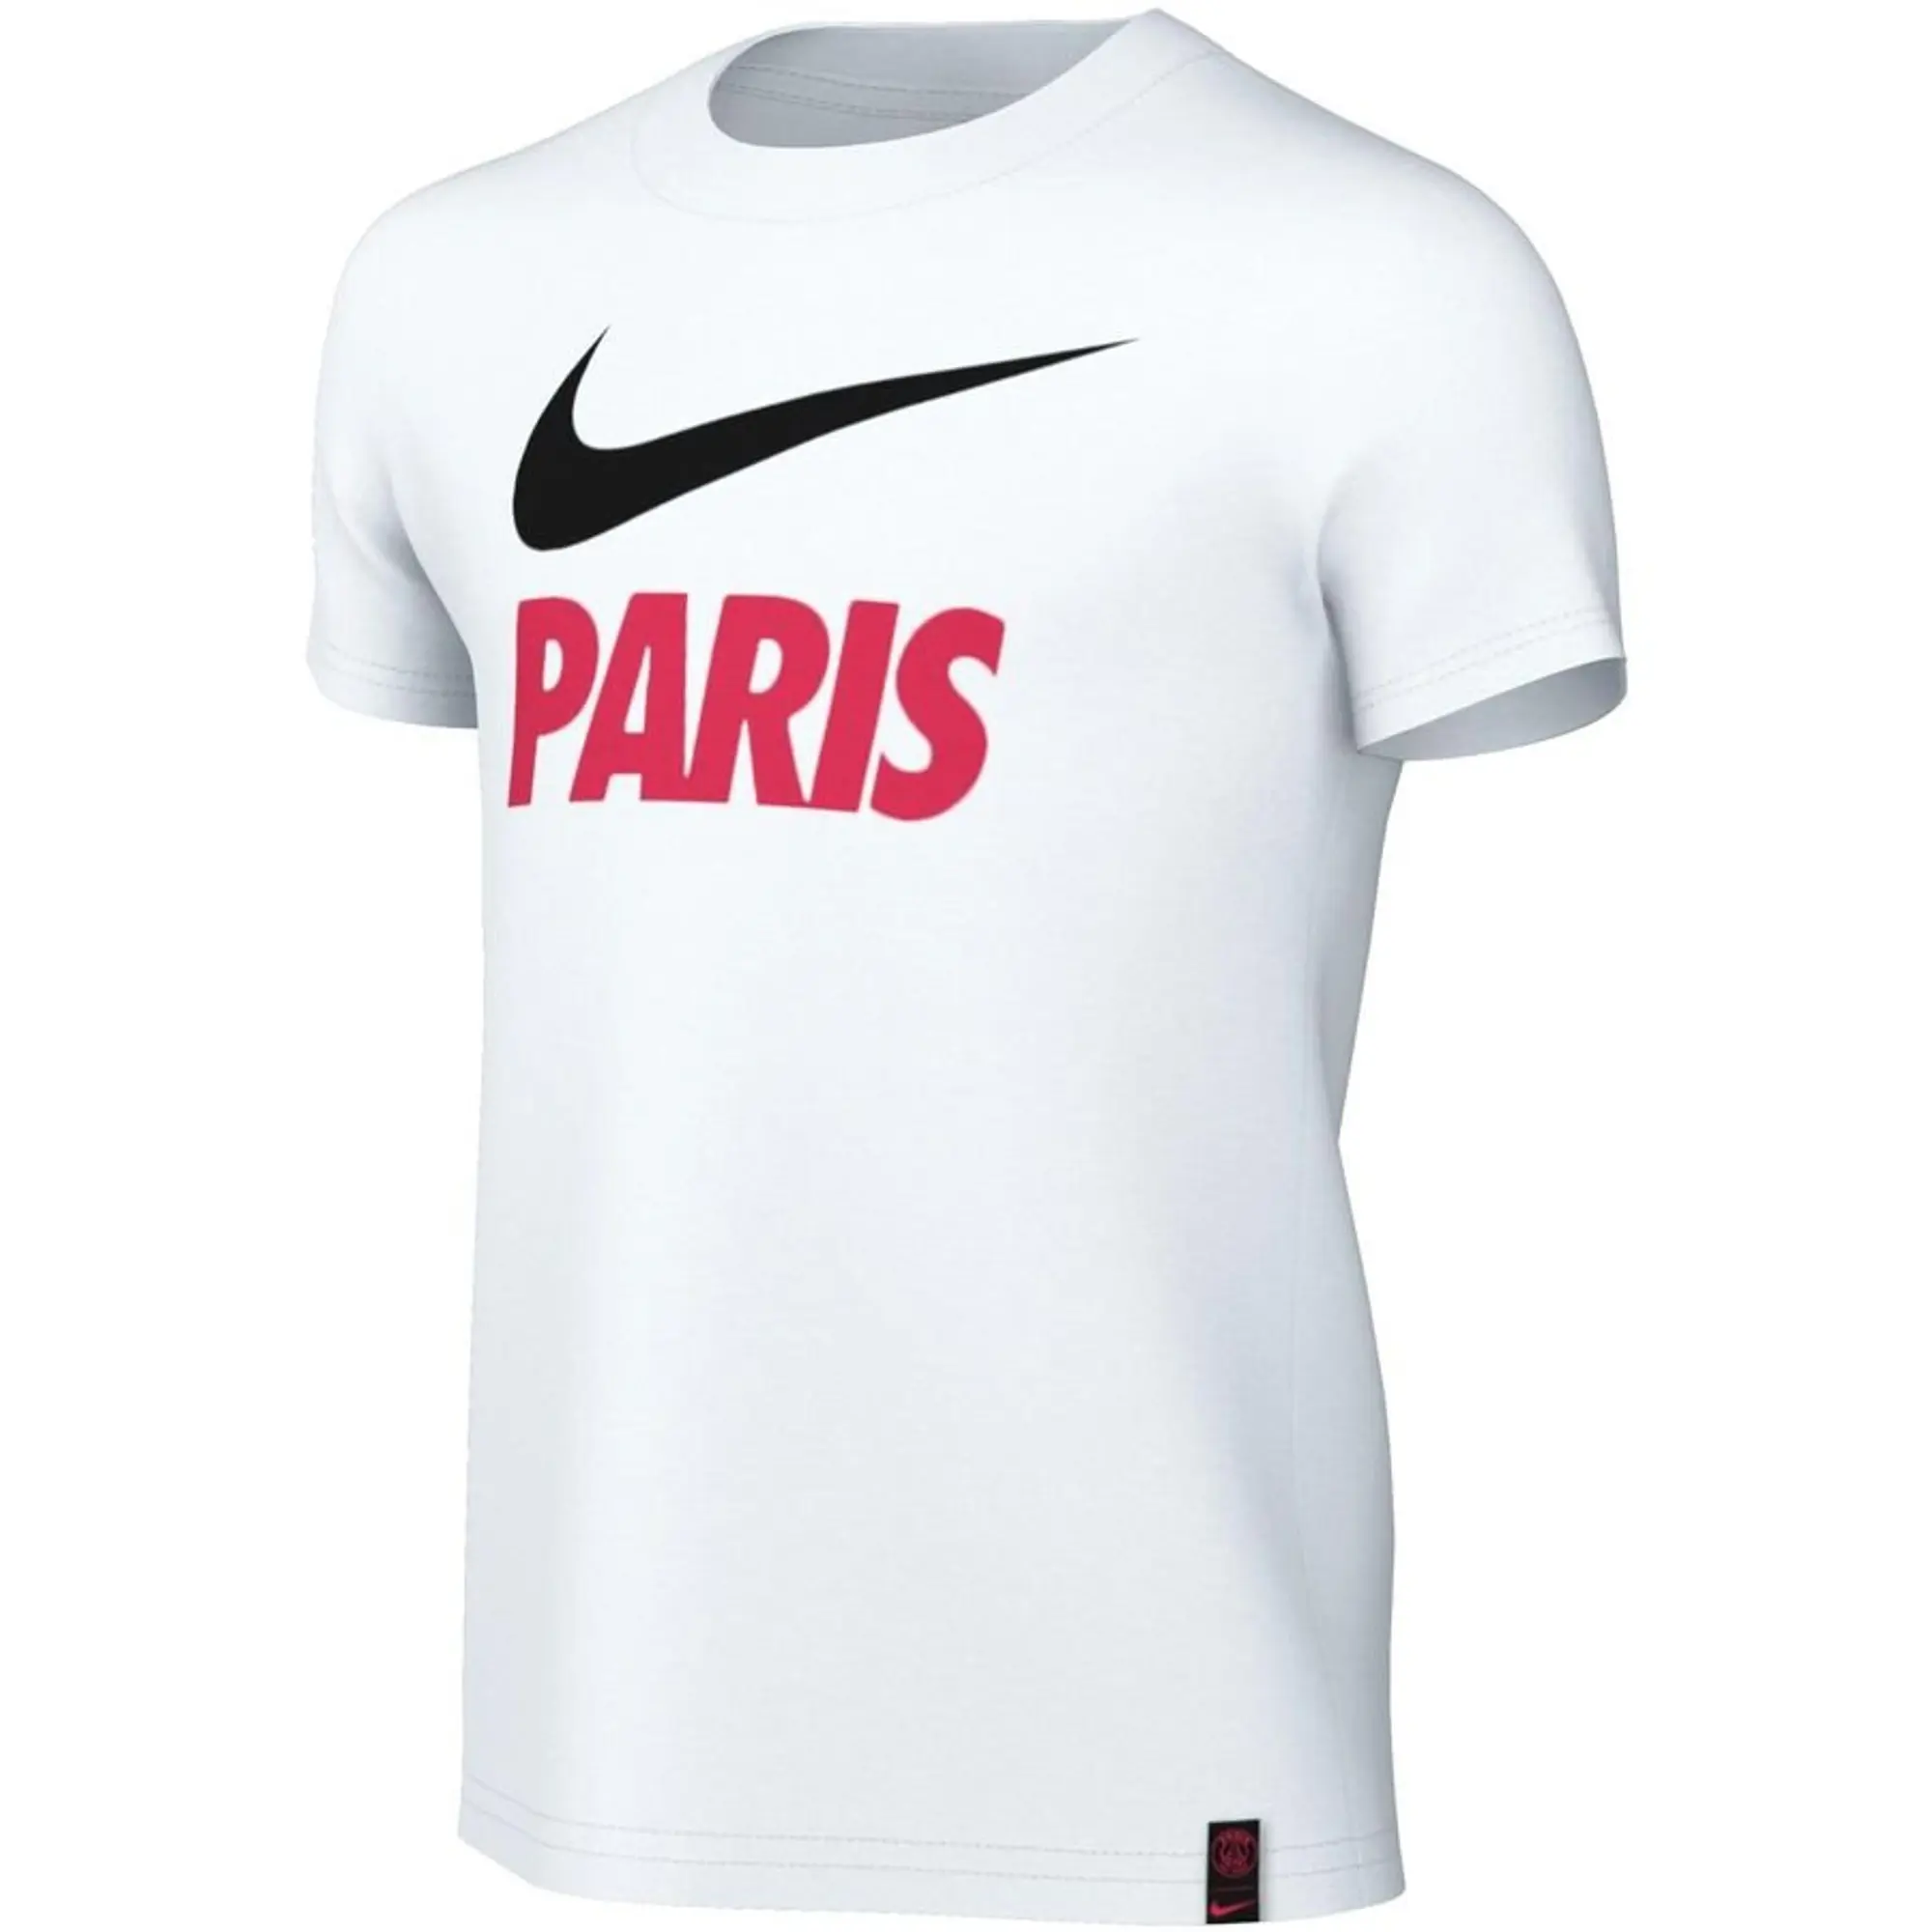 Nike Paris Saint Germain T-Shirt Swoosh Club - White/Siren Red/Black Kids - White